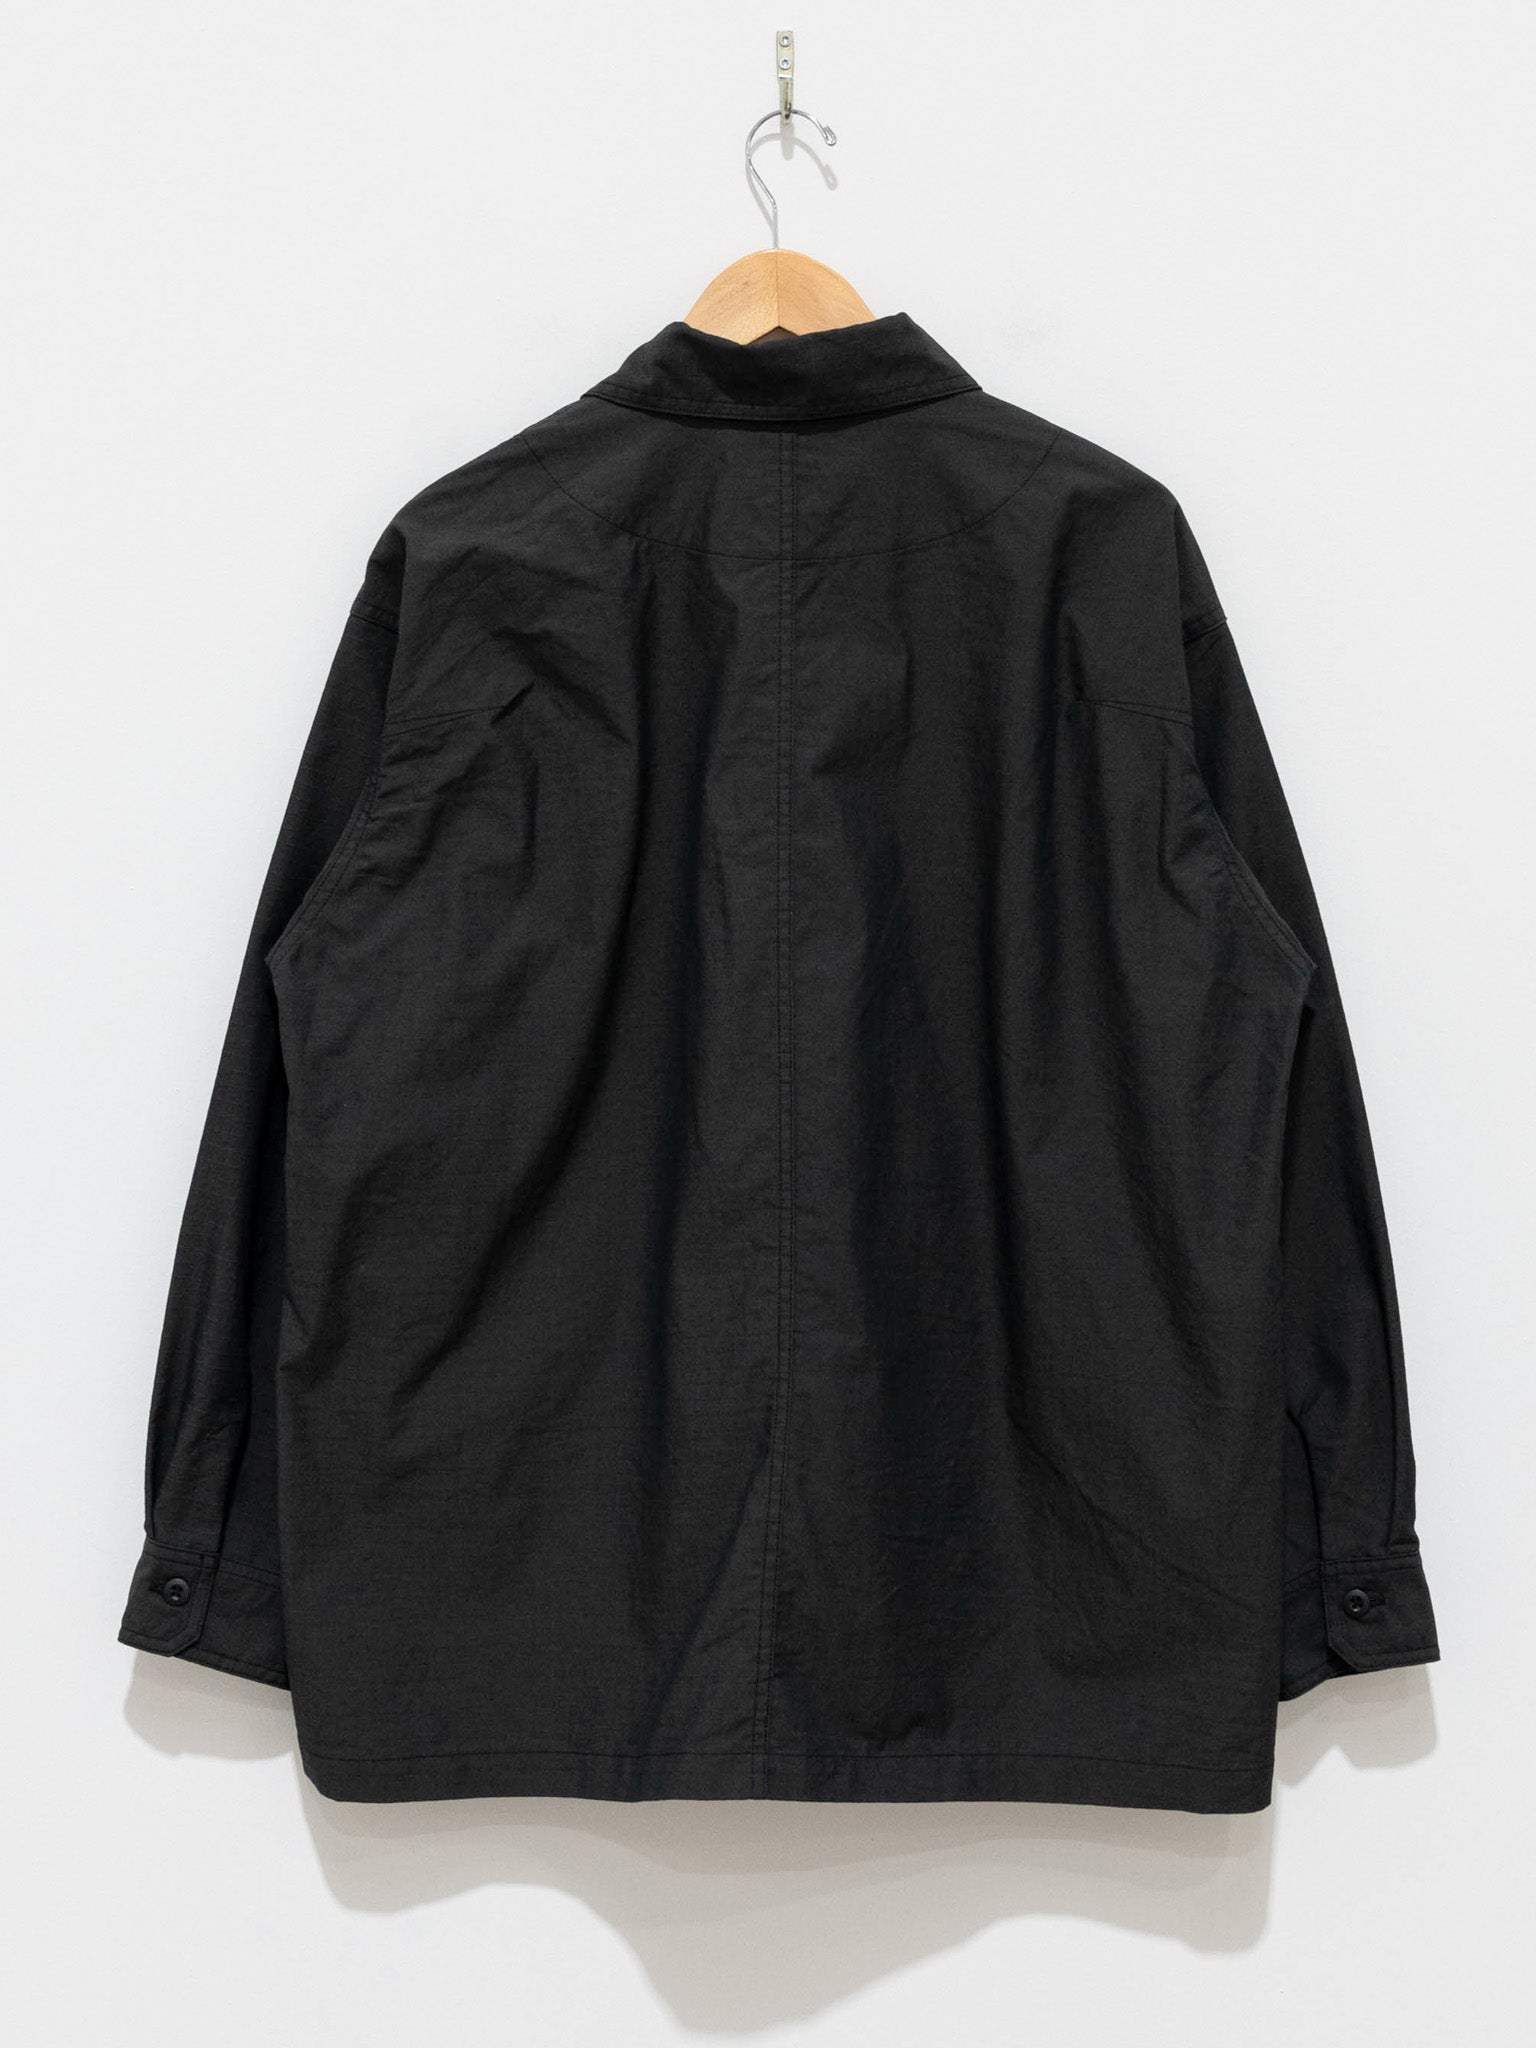 Namu Shop - ts(s) Ripstop Military Shirt Jacket - Charcoal